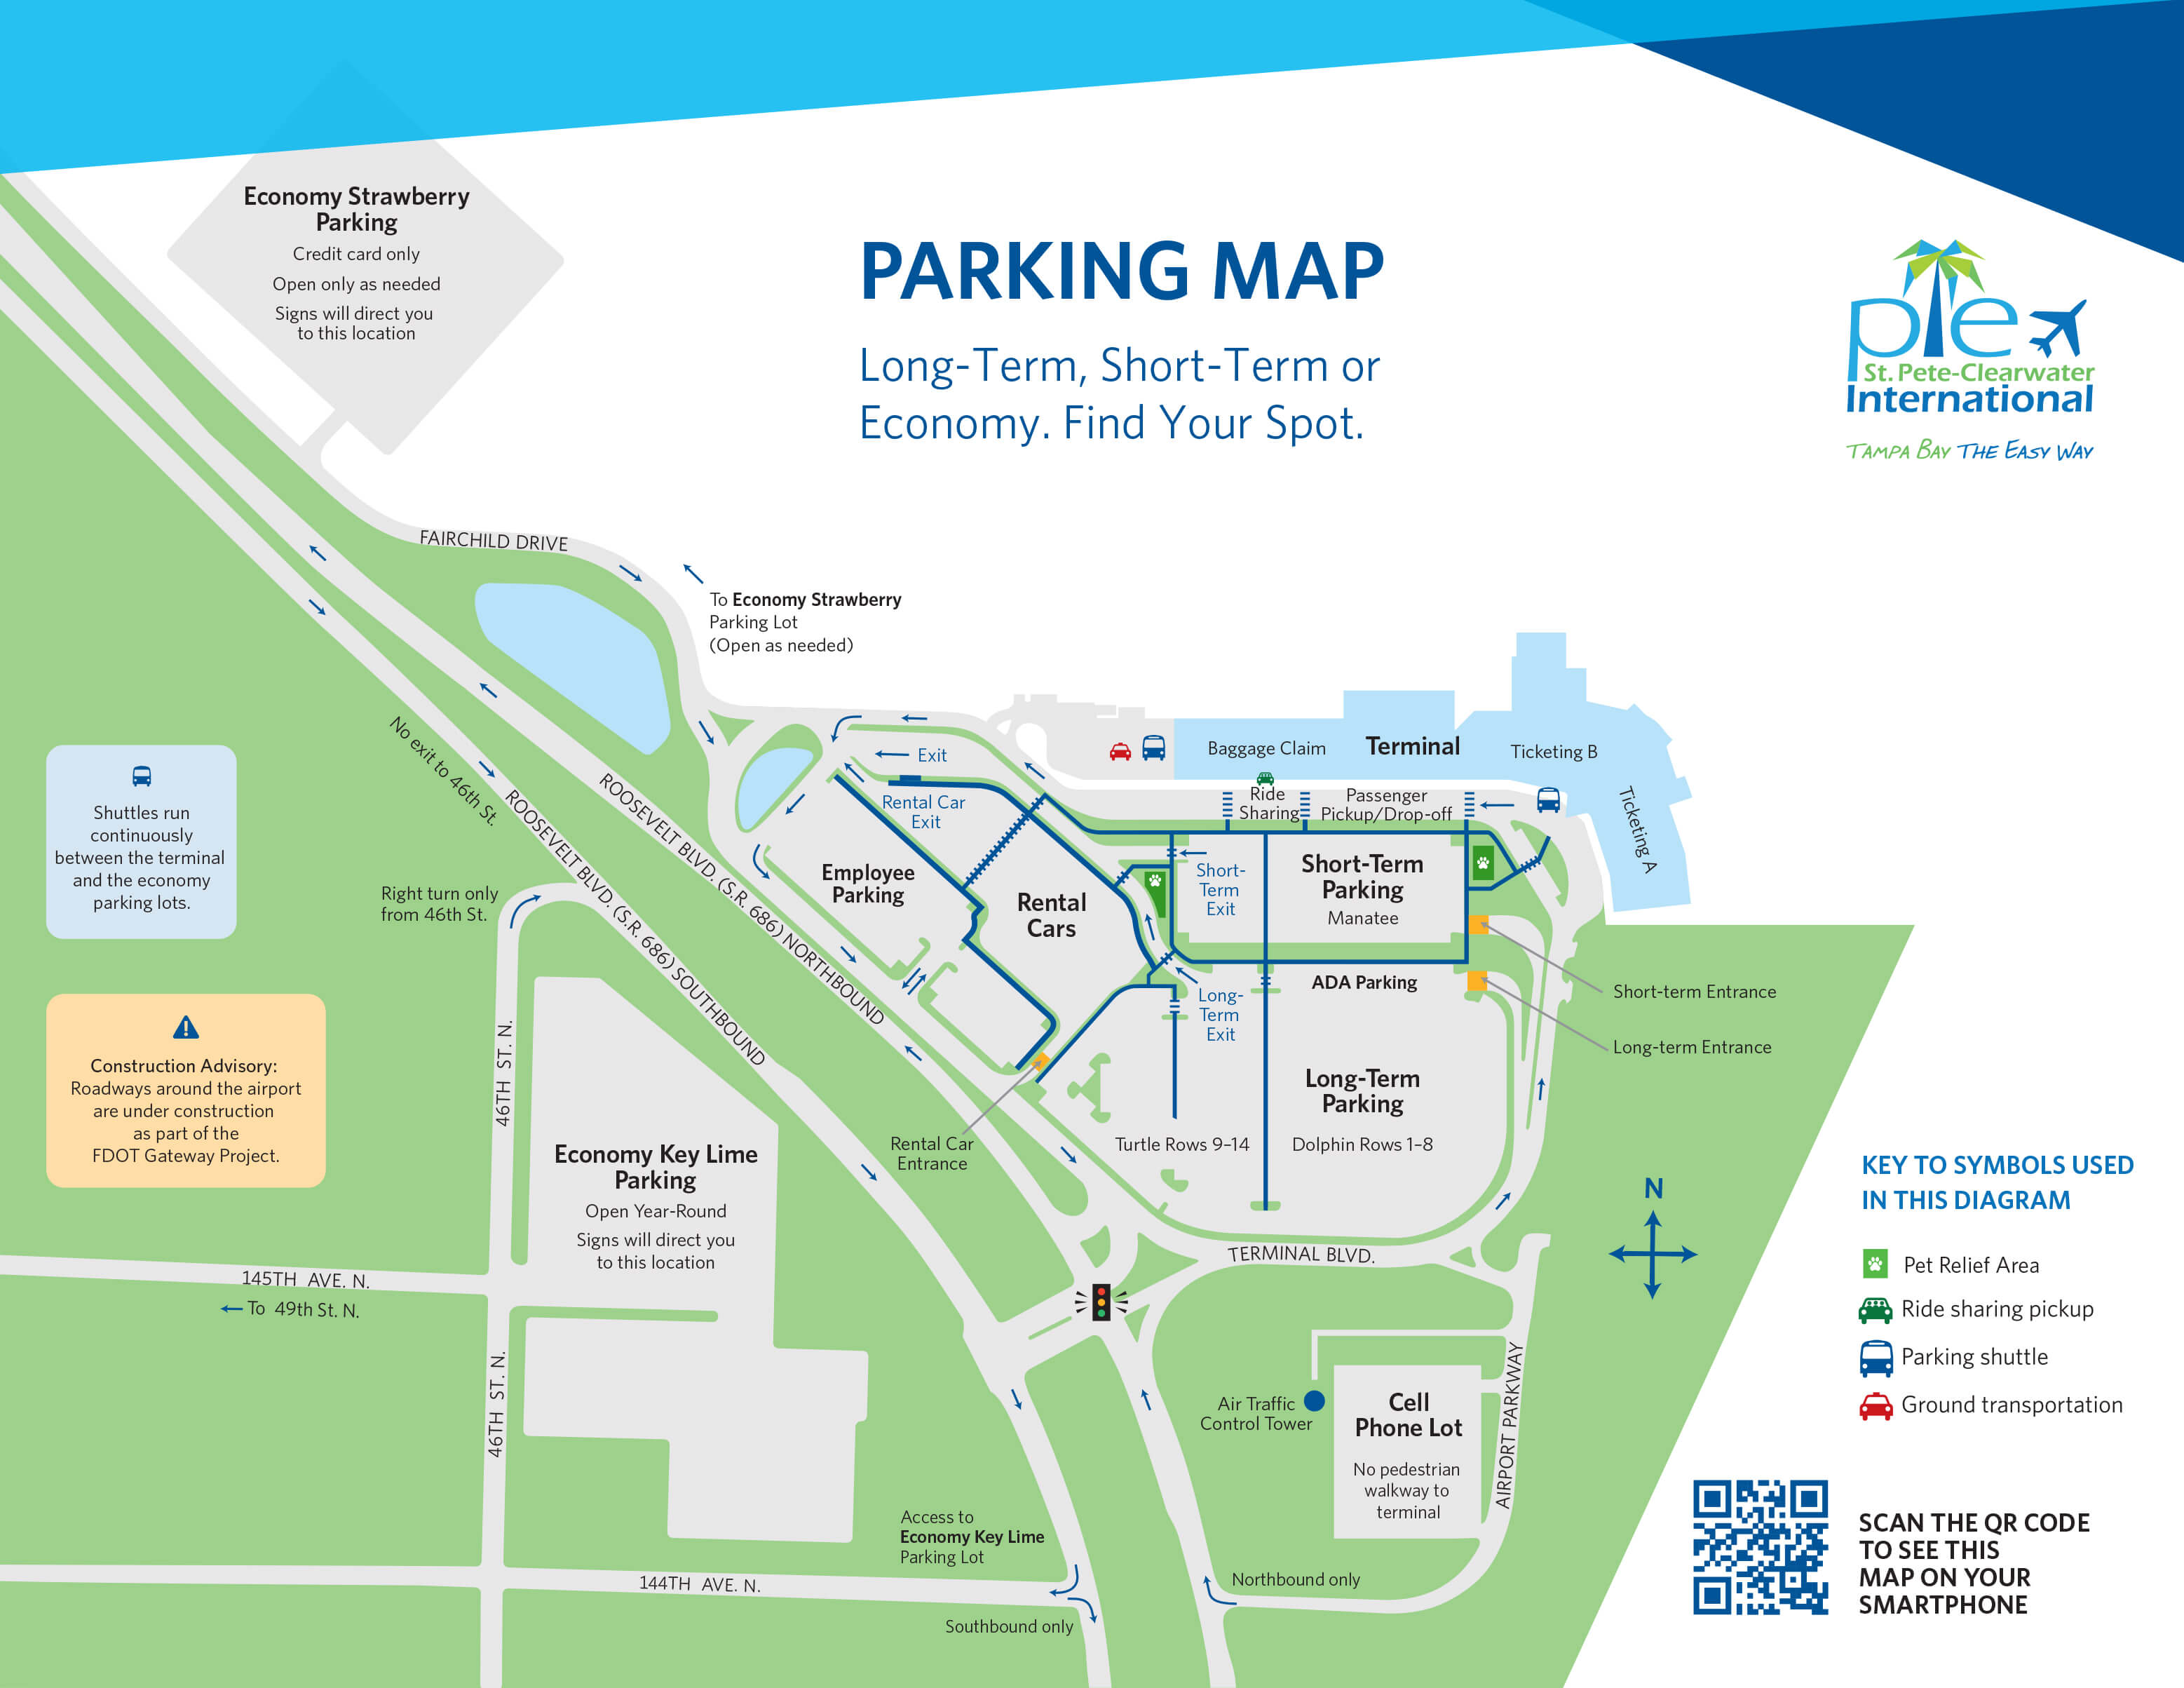 PIE Airport Parking Map